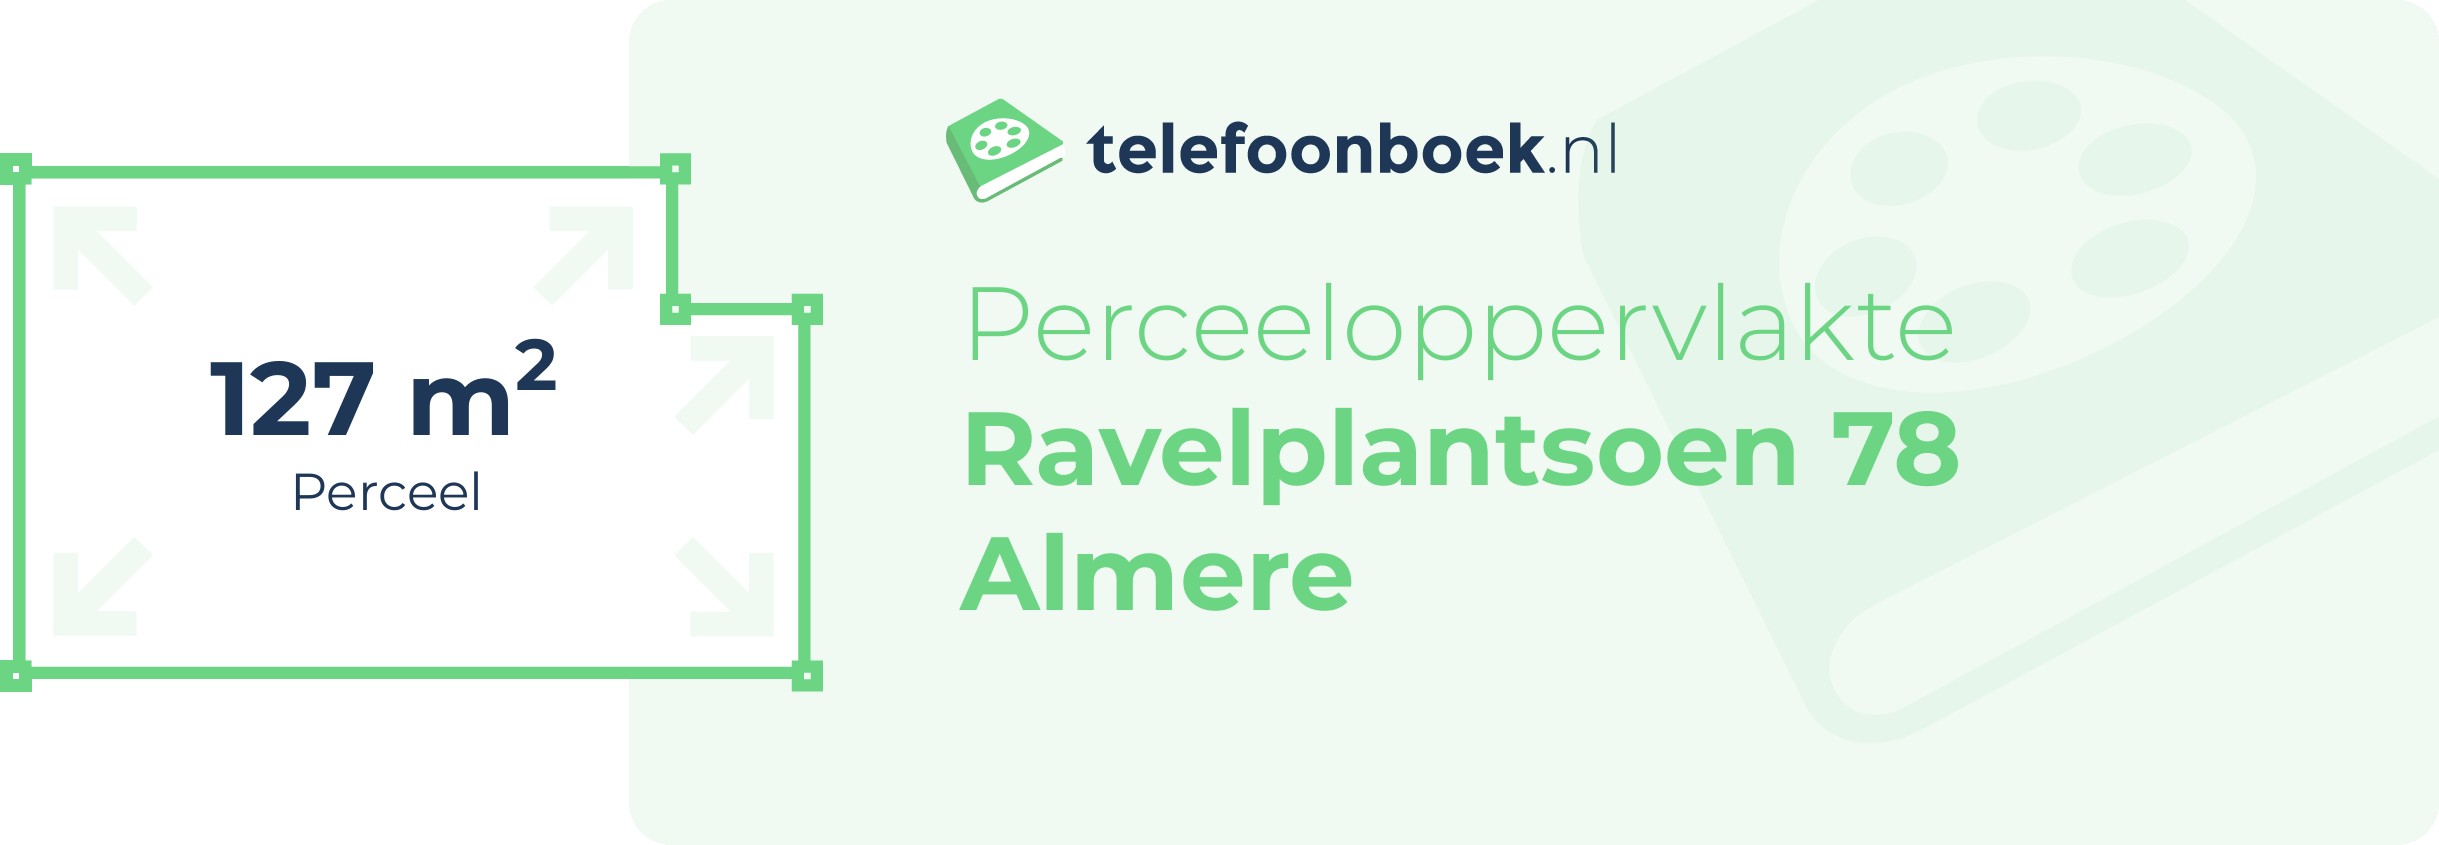 Perceeloppervlakte Ravelplantsoen 78 Almere